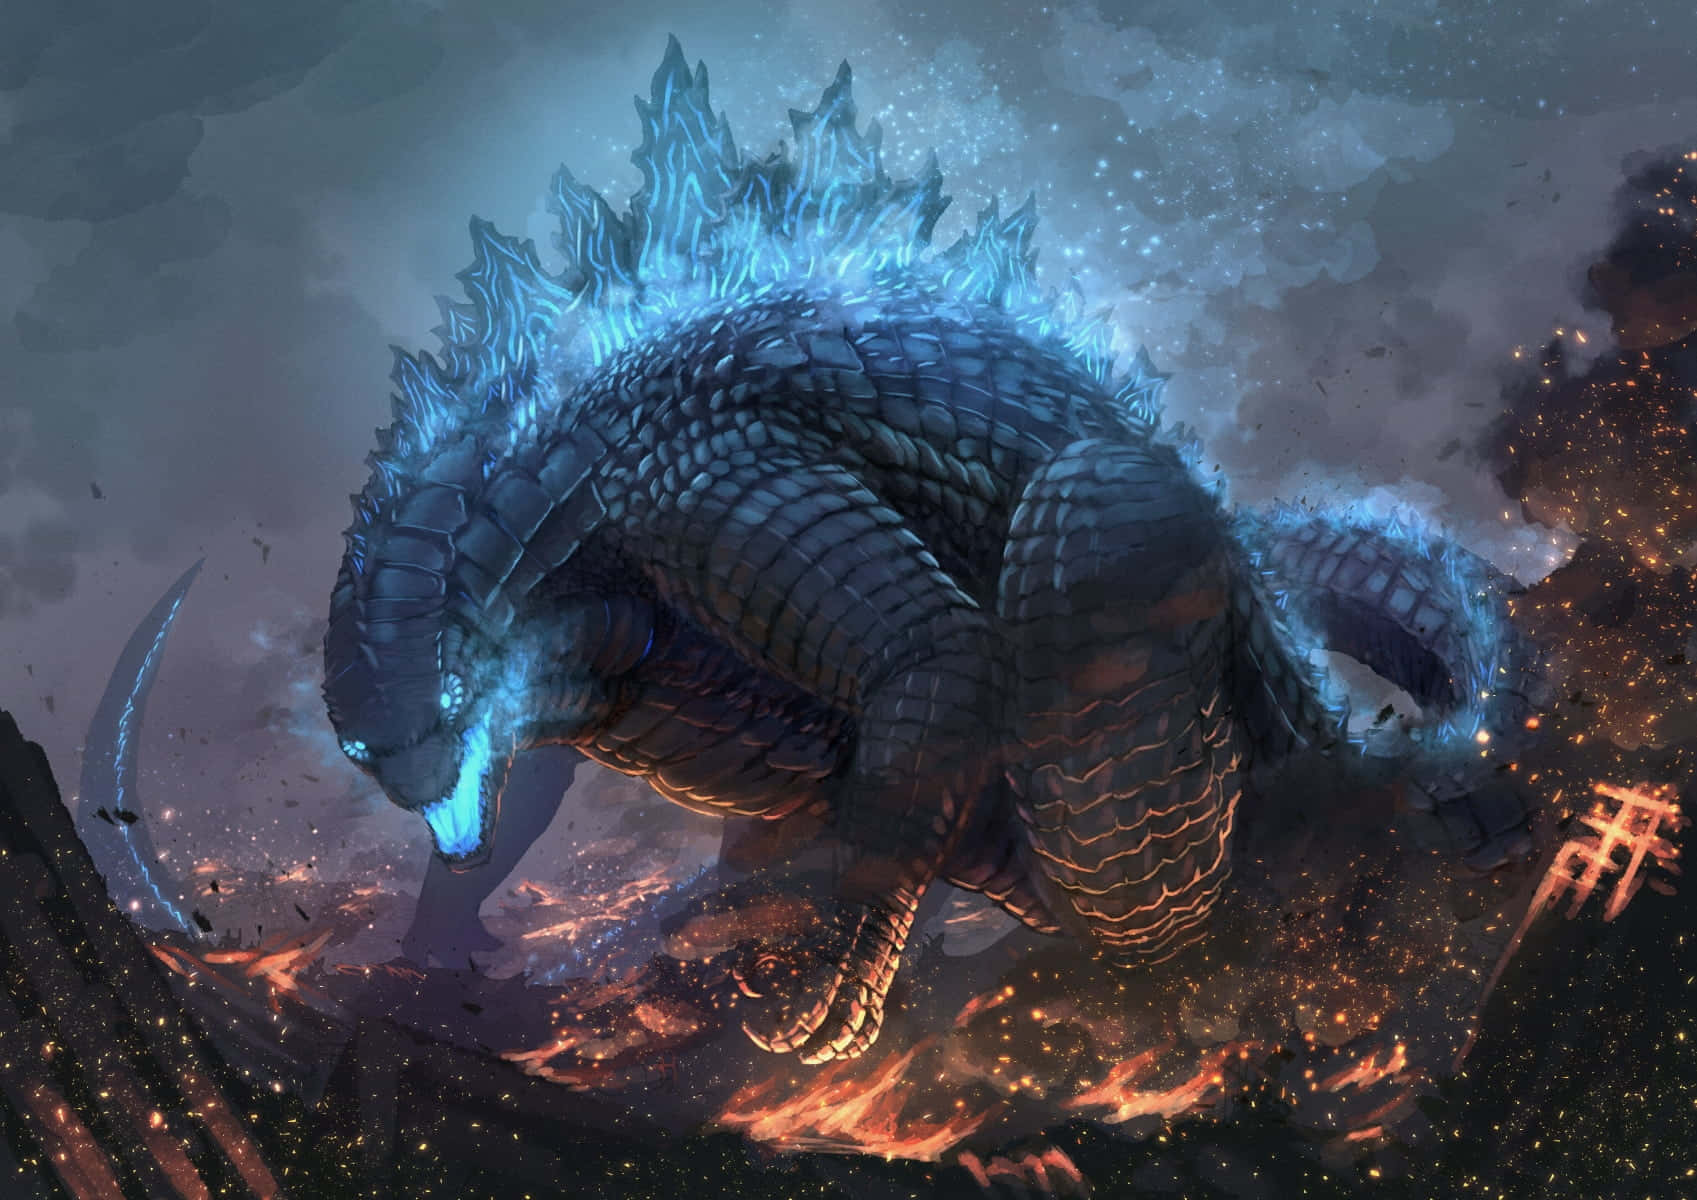 Power Unleashed - A Giant Godzilla Awakens